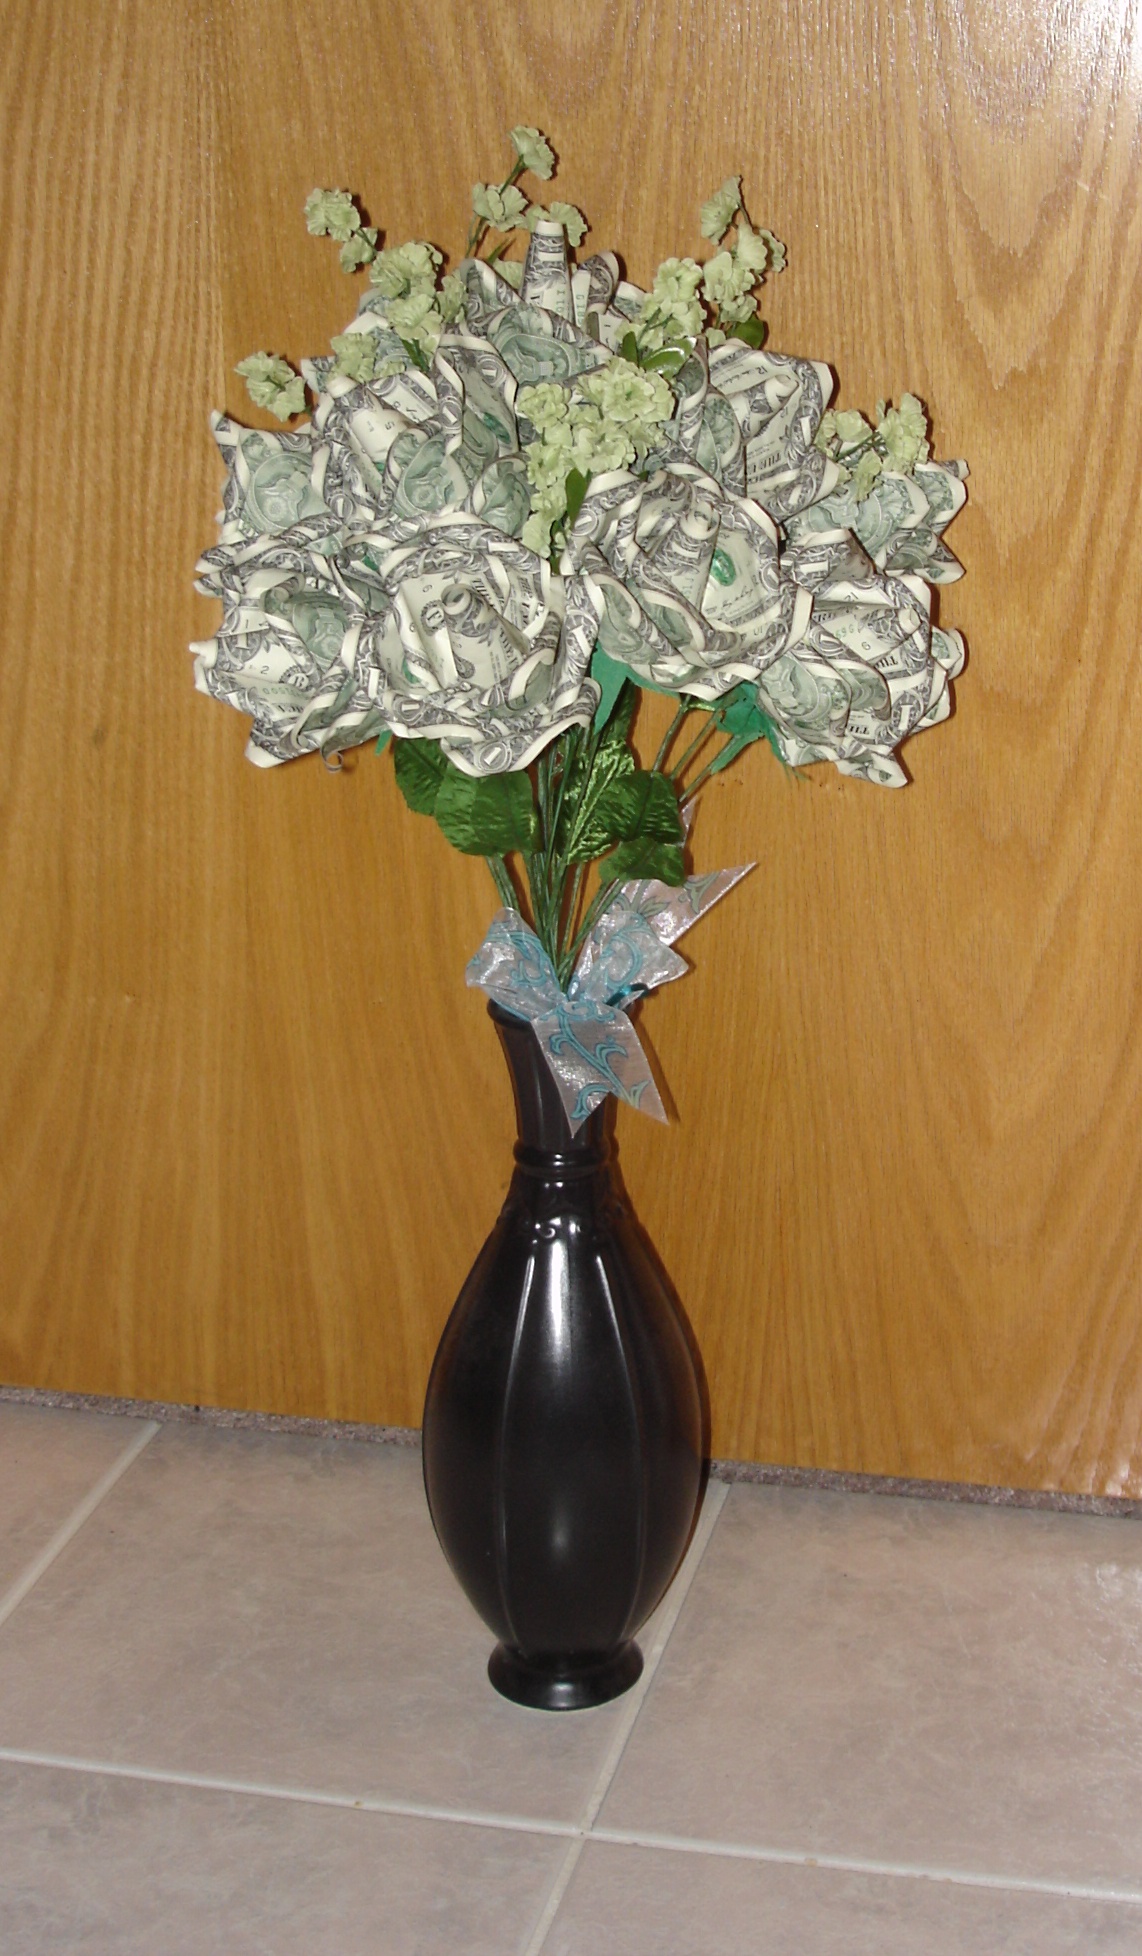 Origami_money_roses_bouquet_by_pandaraoke.jpg